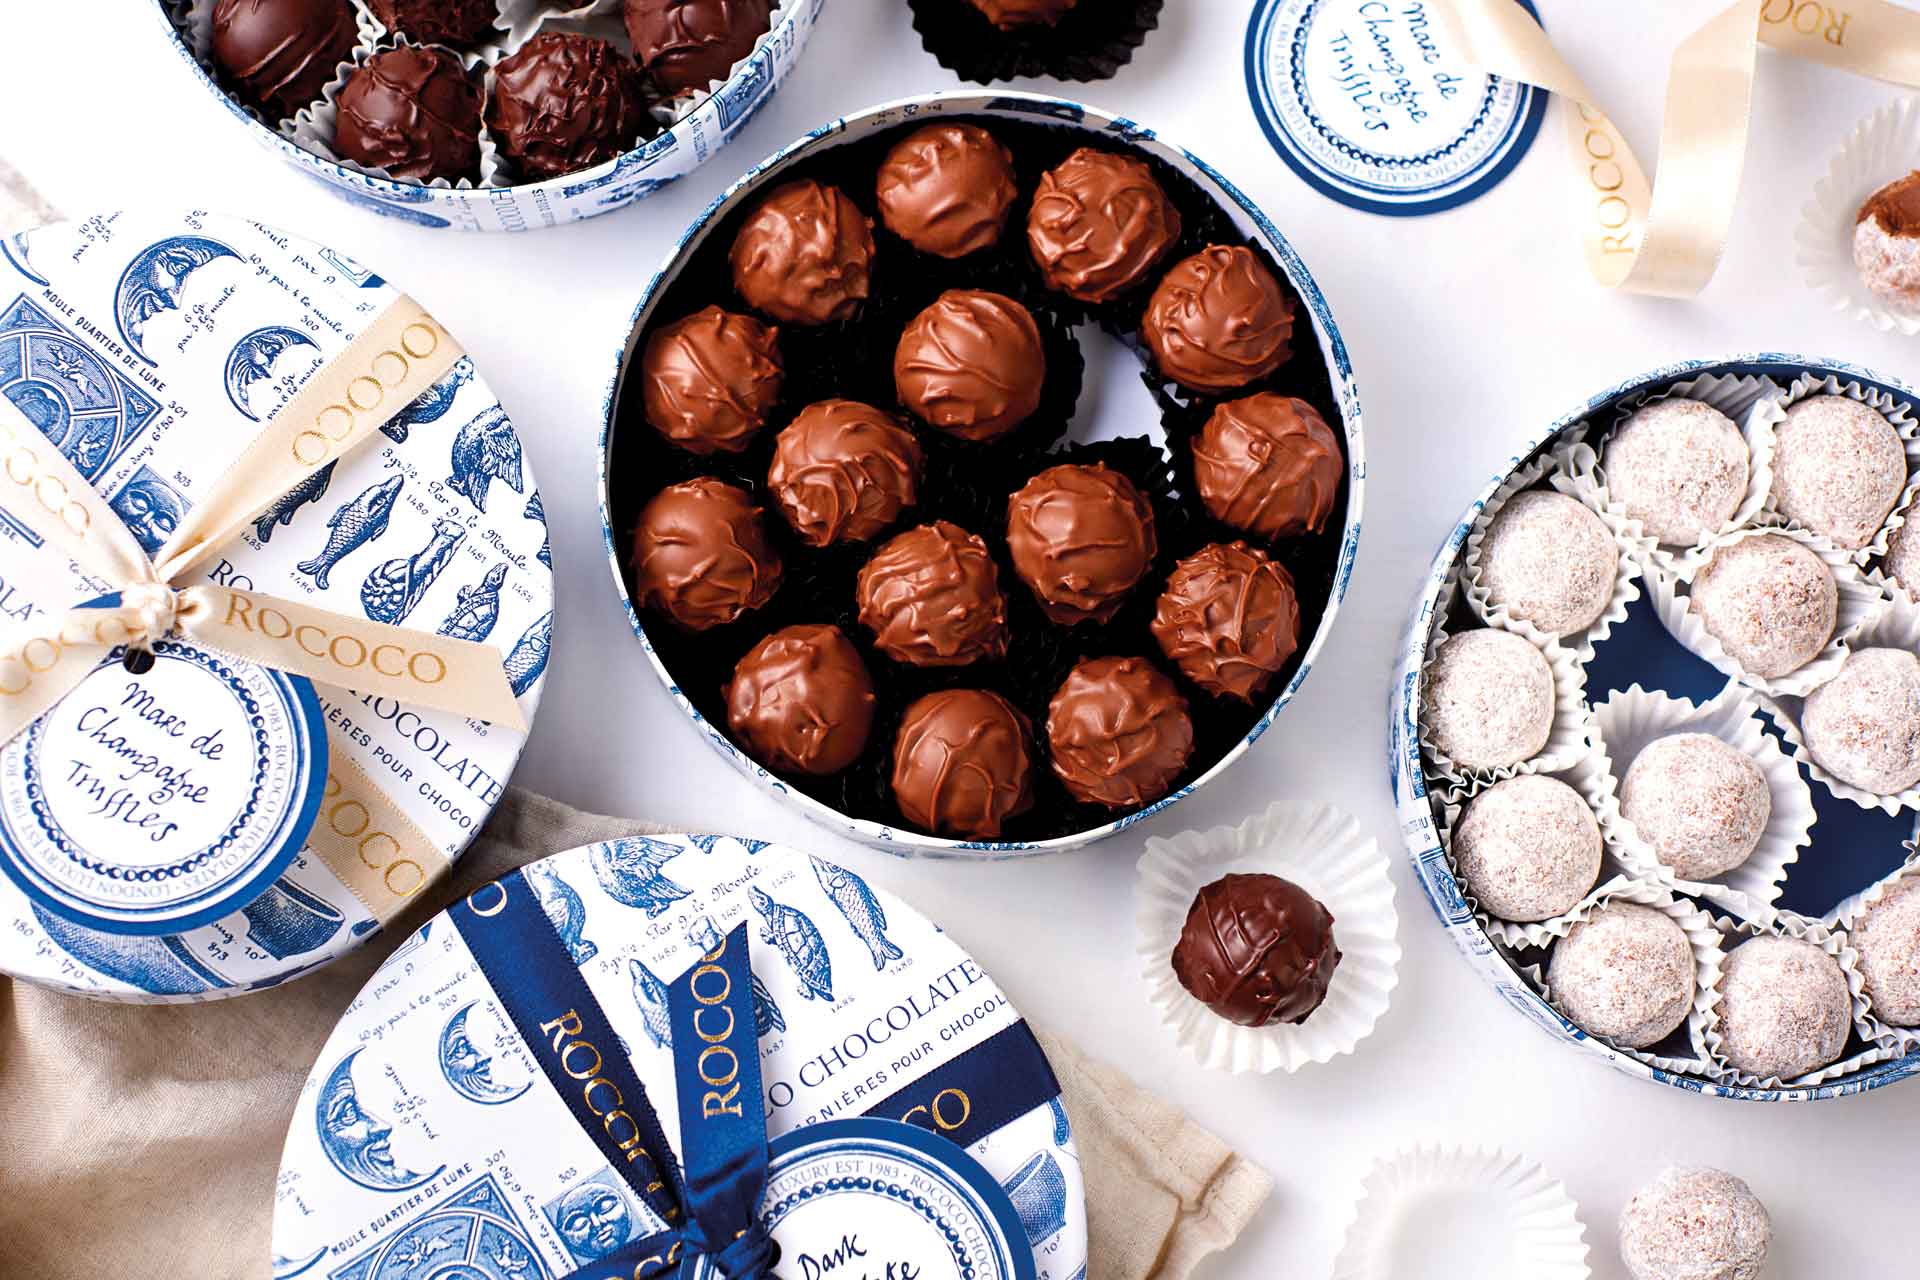 Award-Winning Chocolatier Rococo Is Celebrating A New Dawn